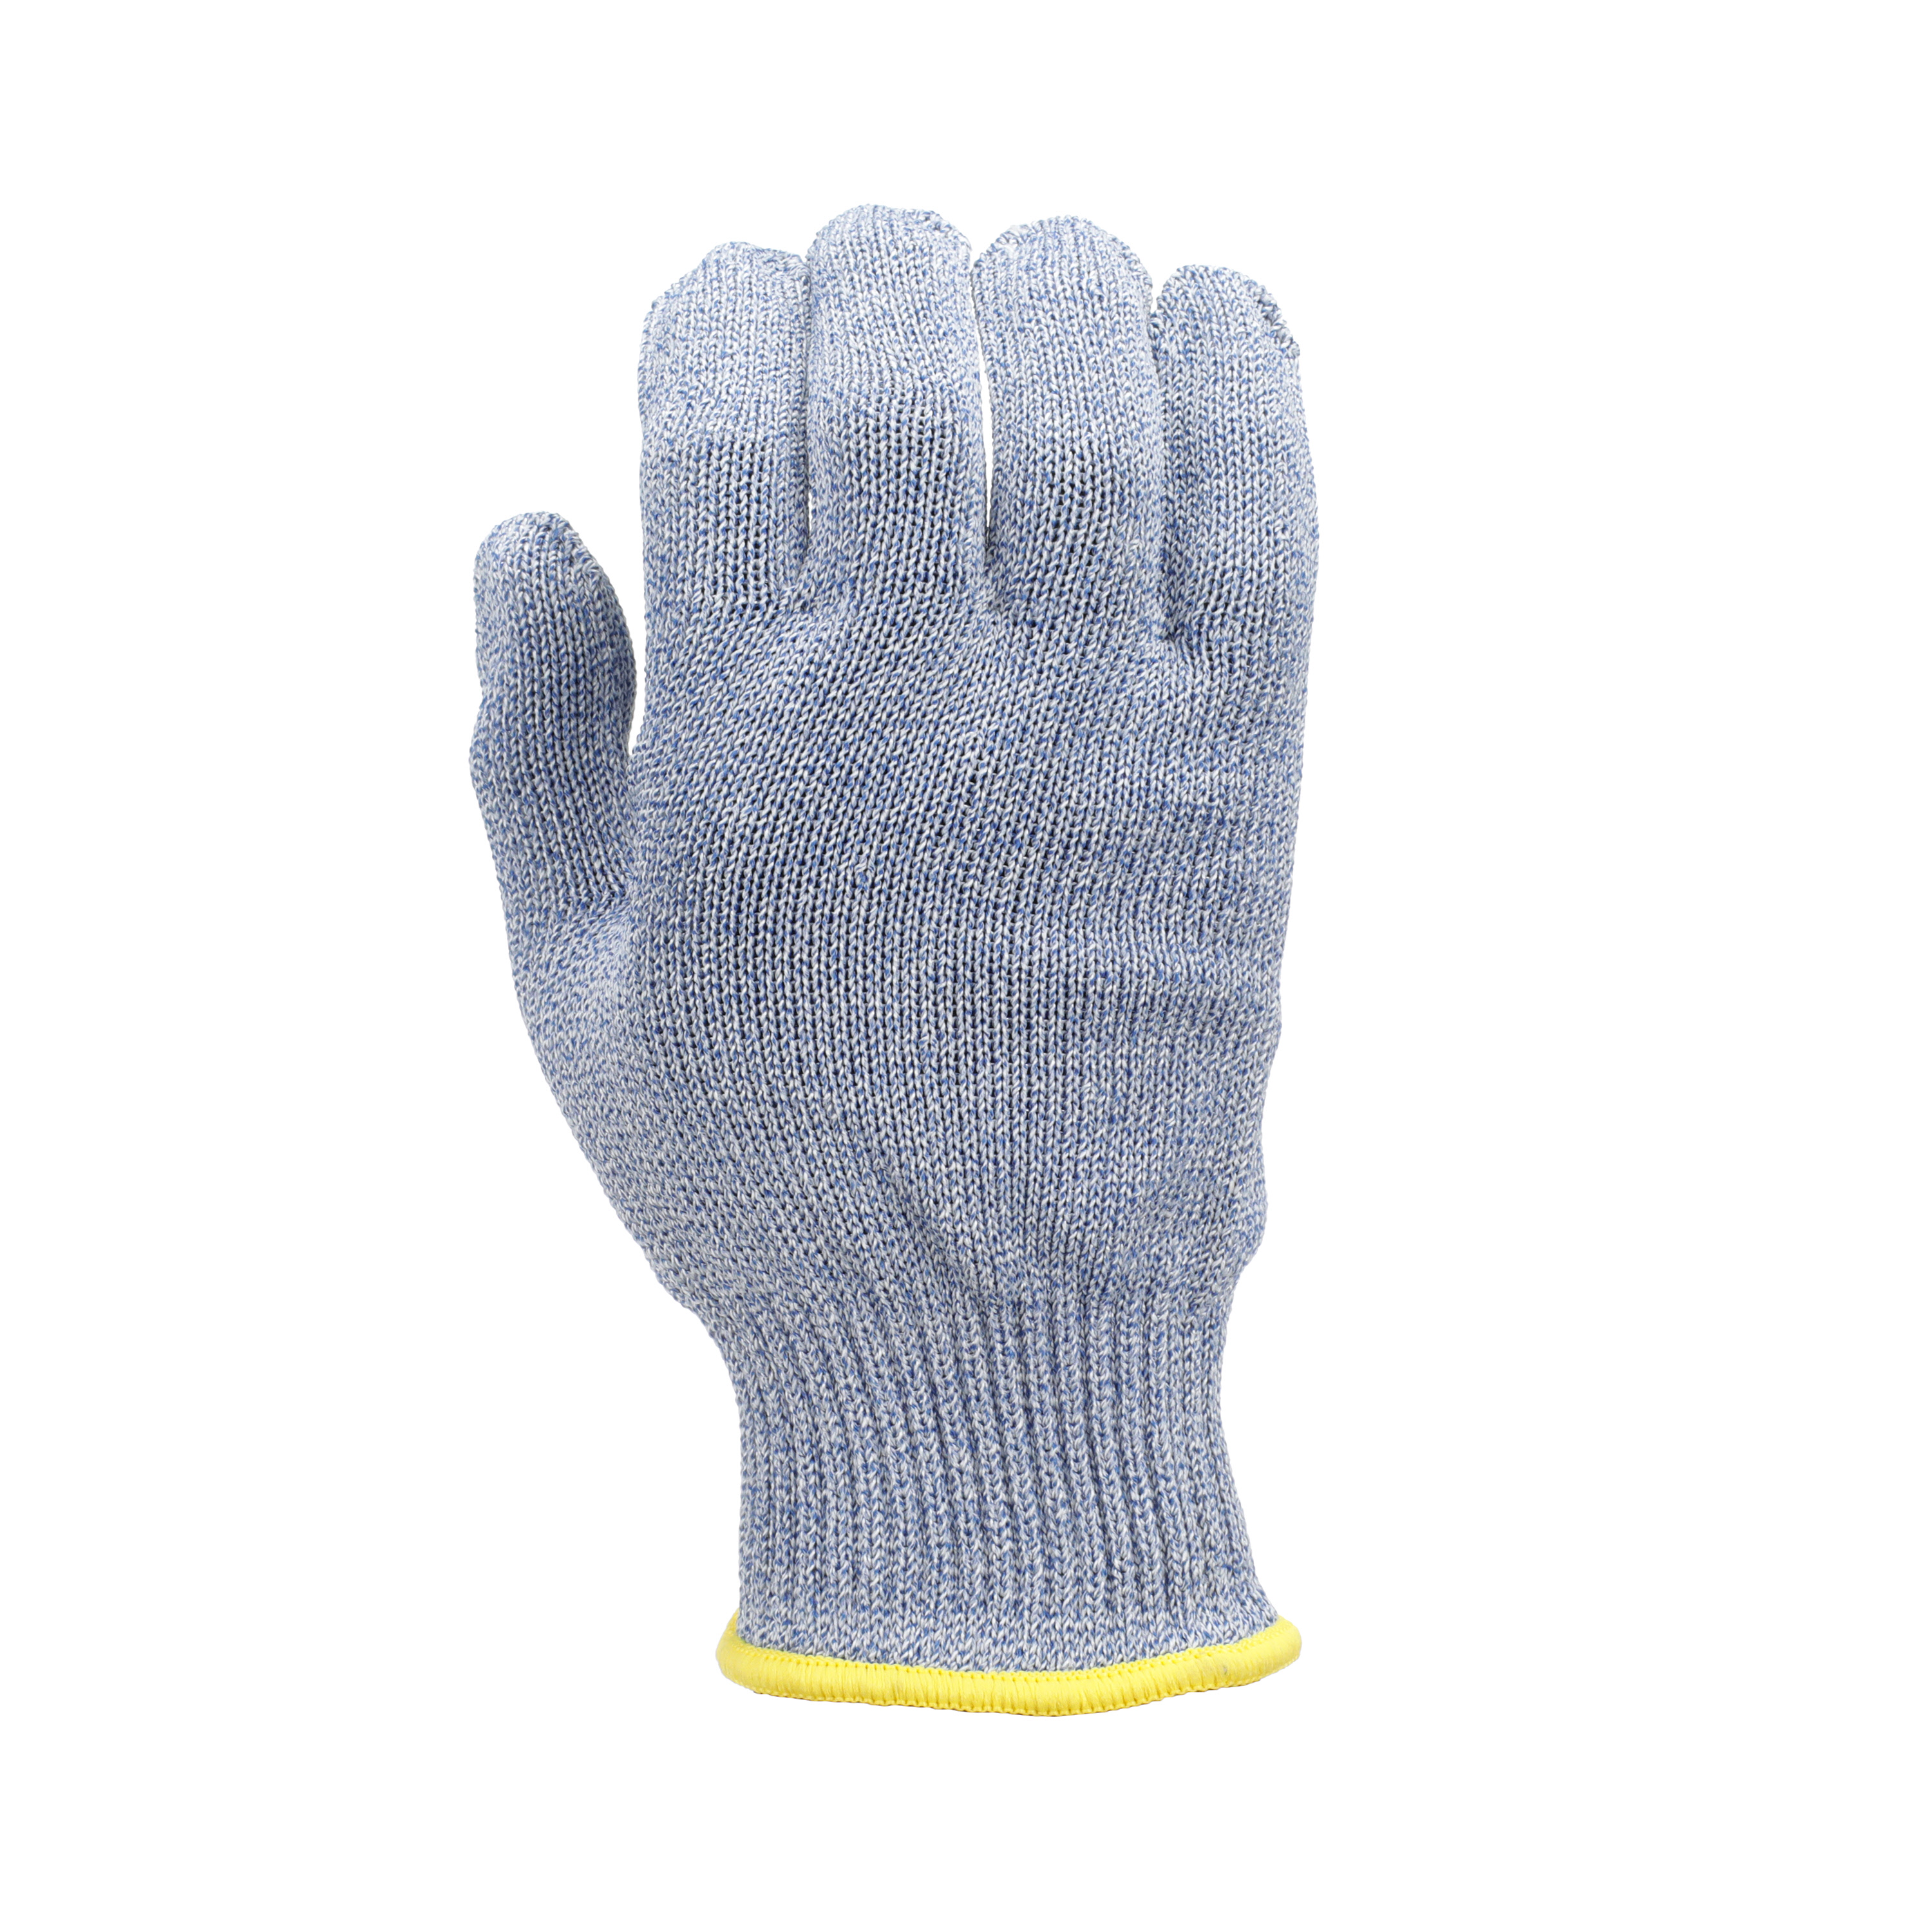 UltraSource Gloves - Premium Cut Resistant - ANSI Level A6 Cut